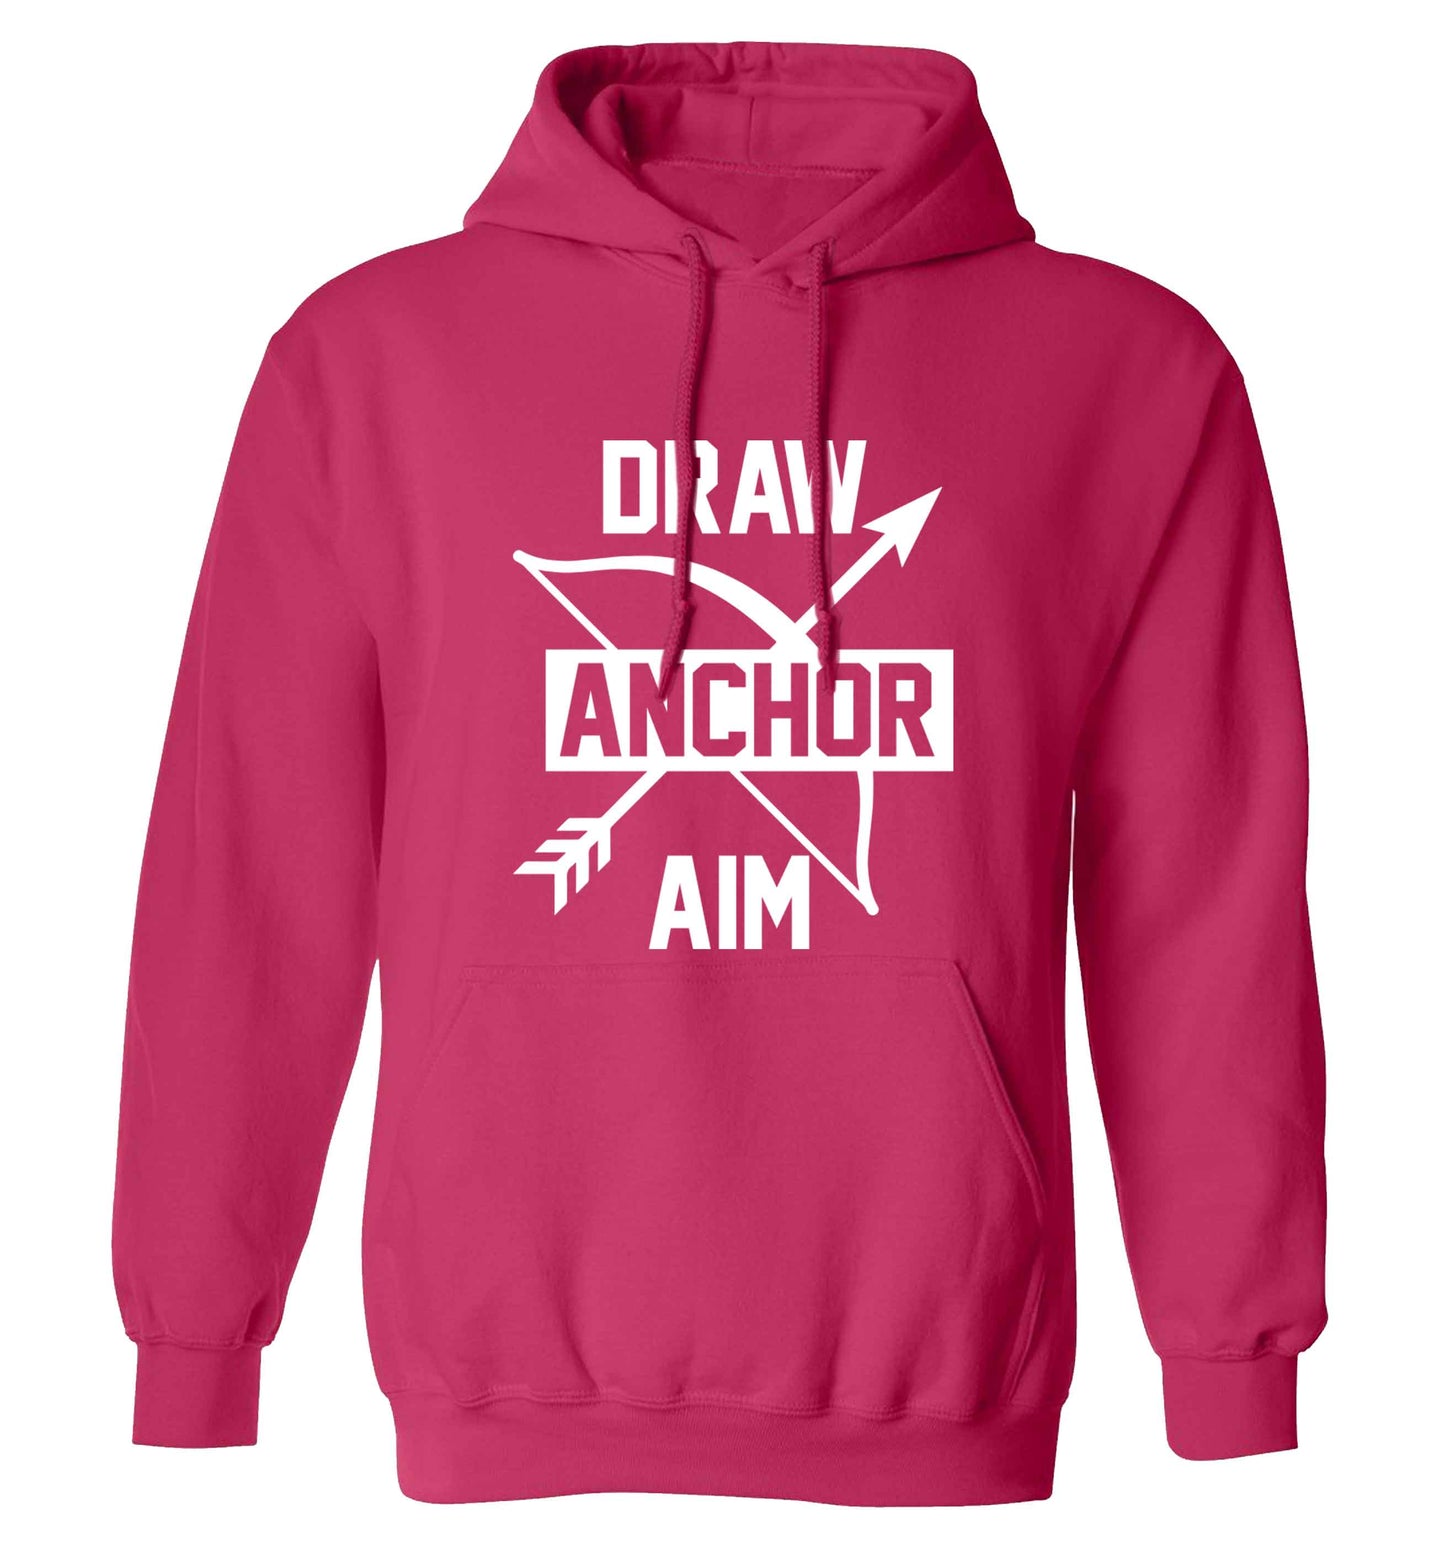 Draw anchor aim adults unisex pink hoodie 2XL